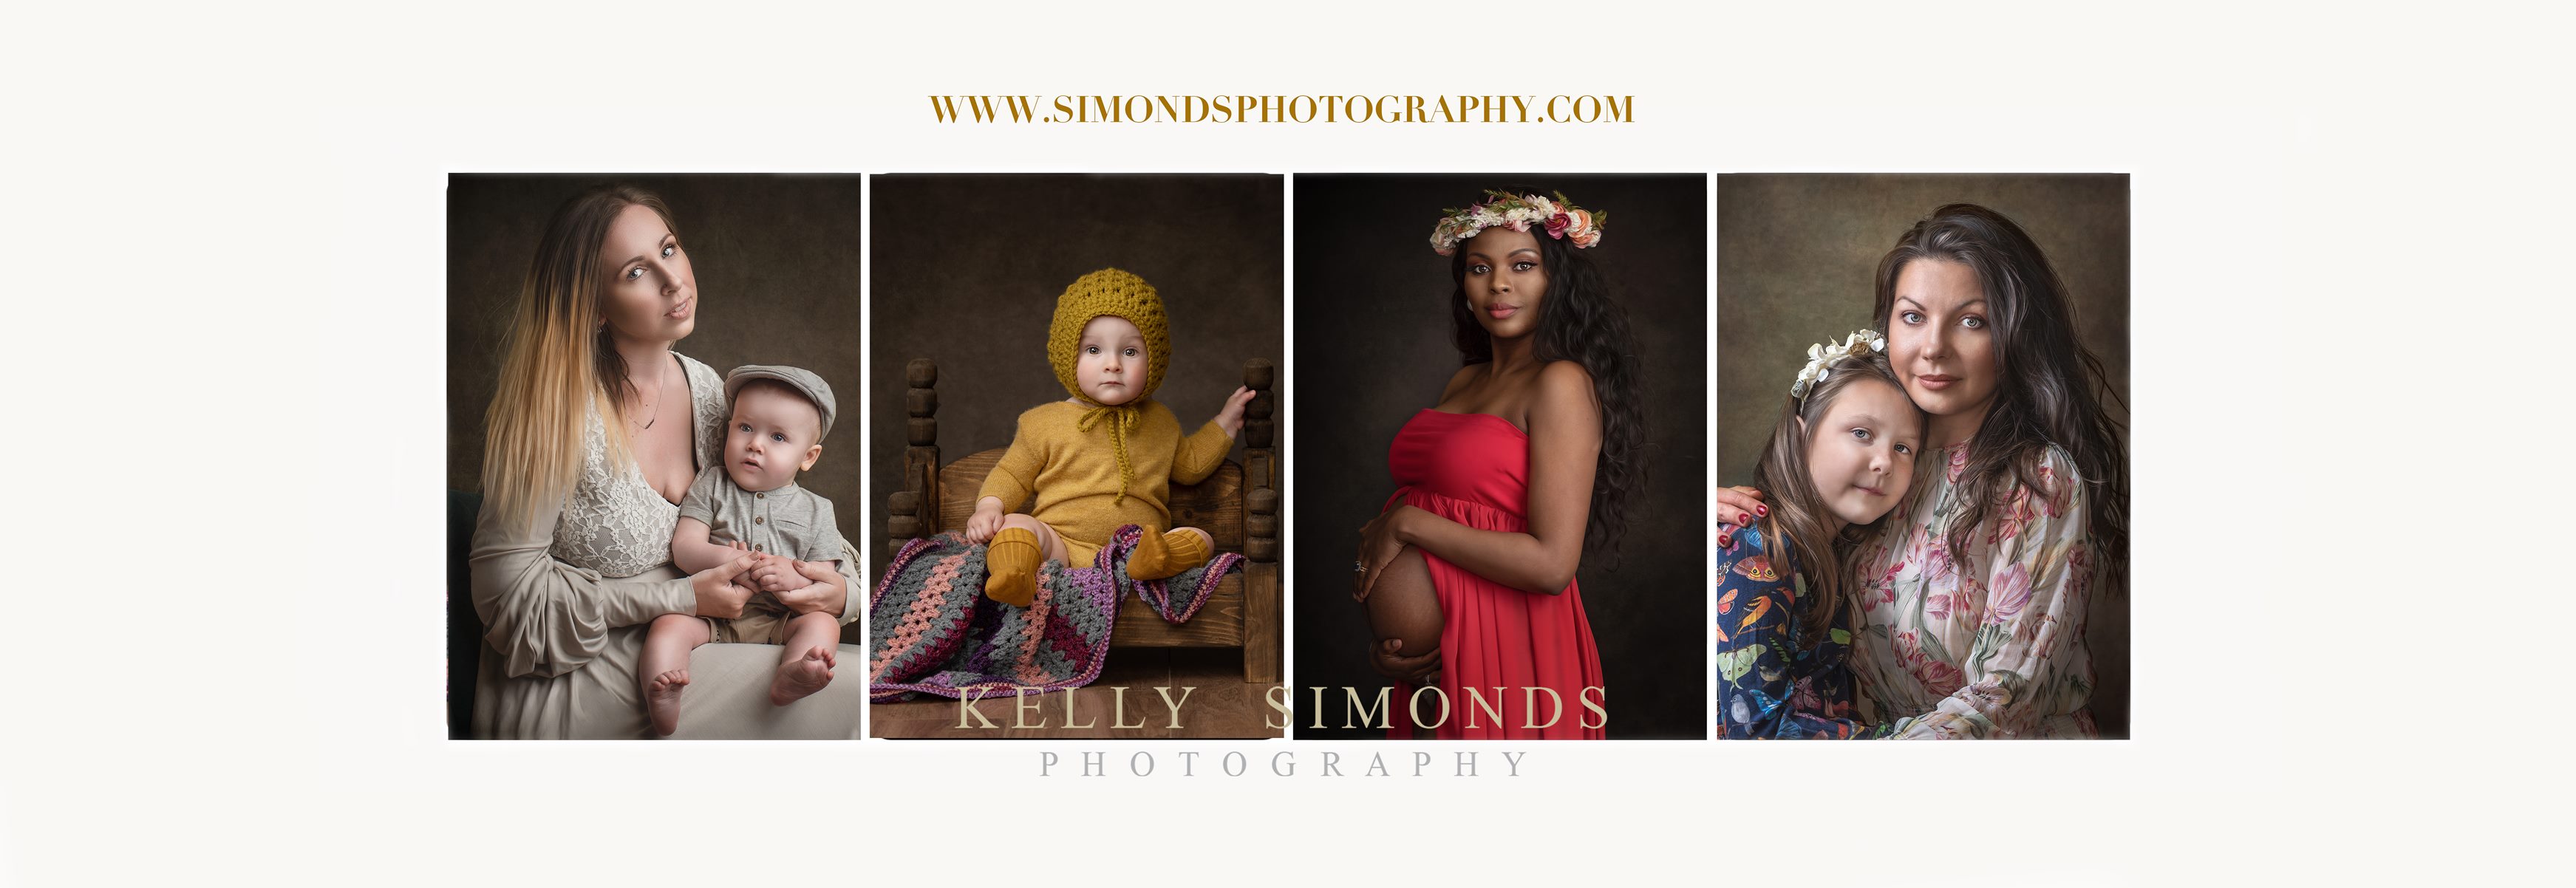 Kelly Simonds Photography's main image